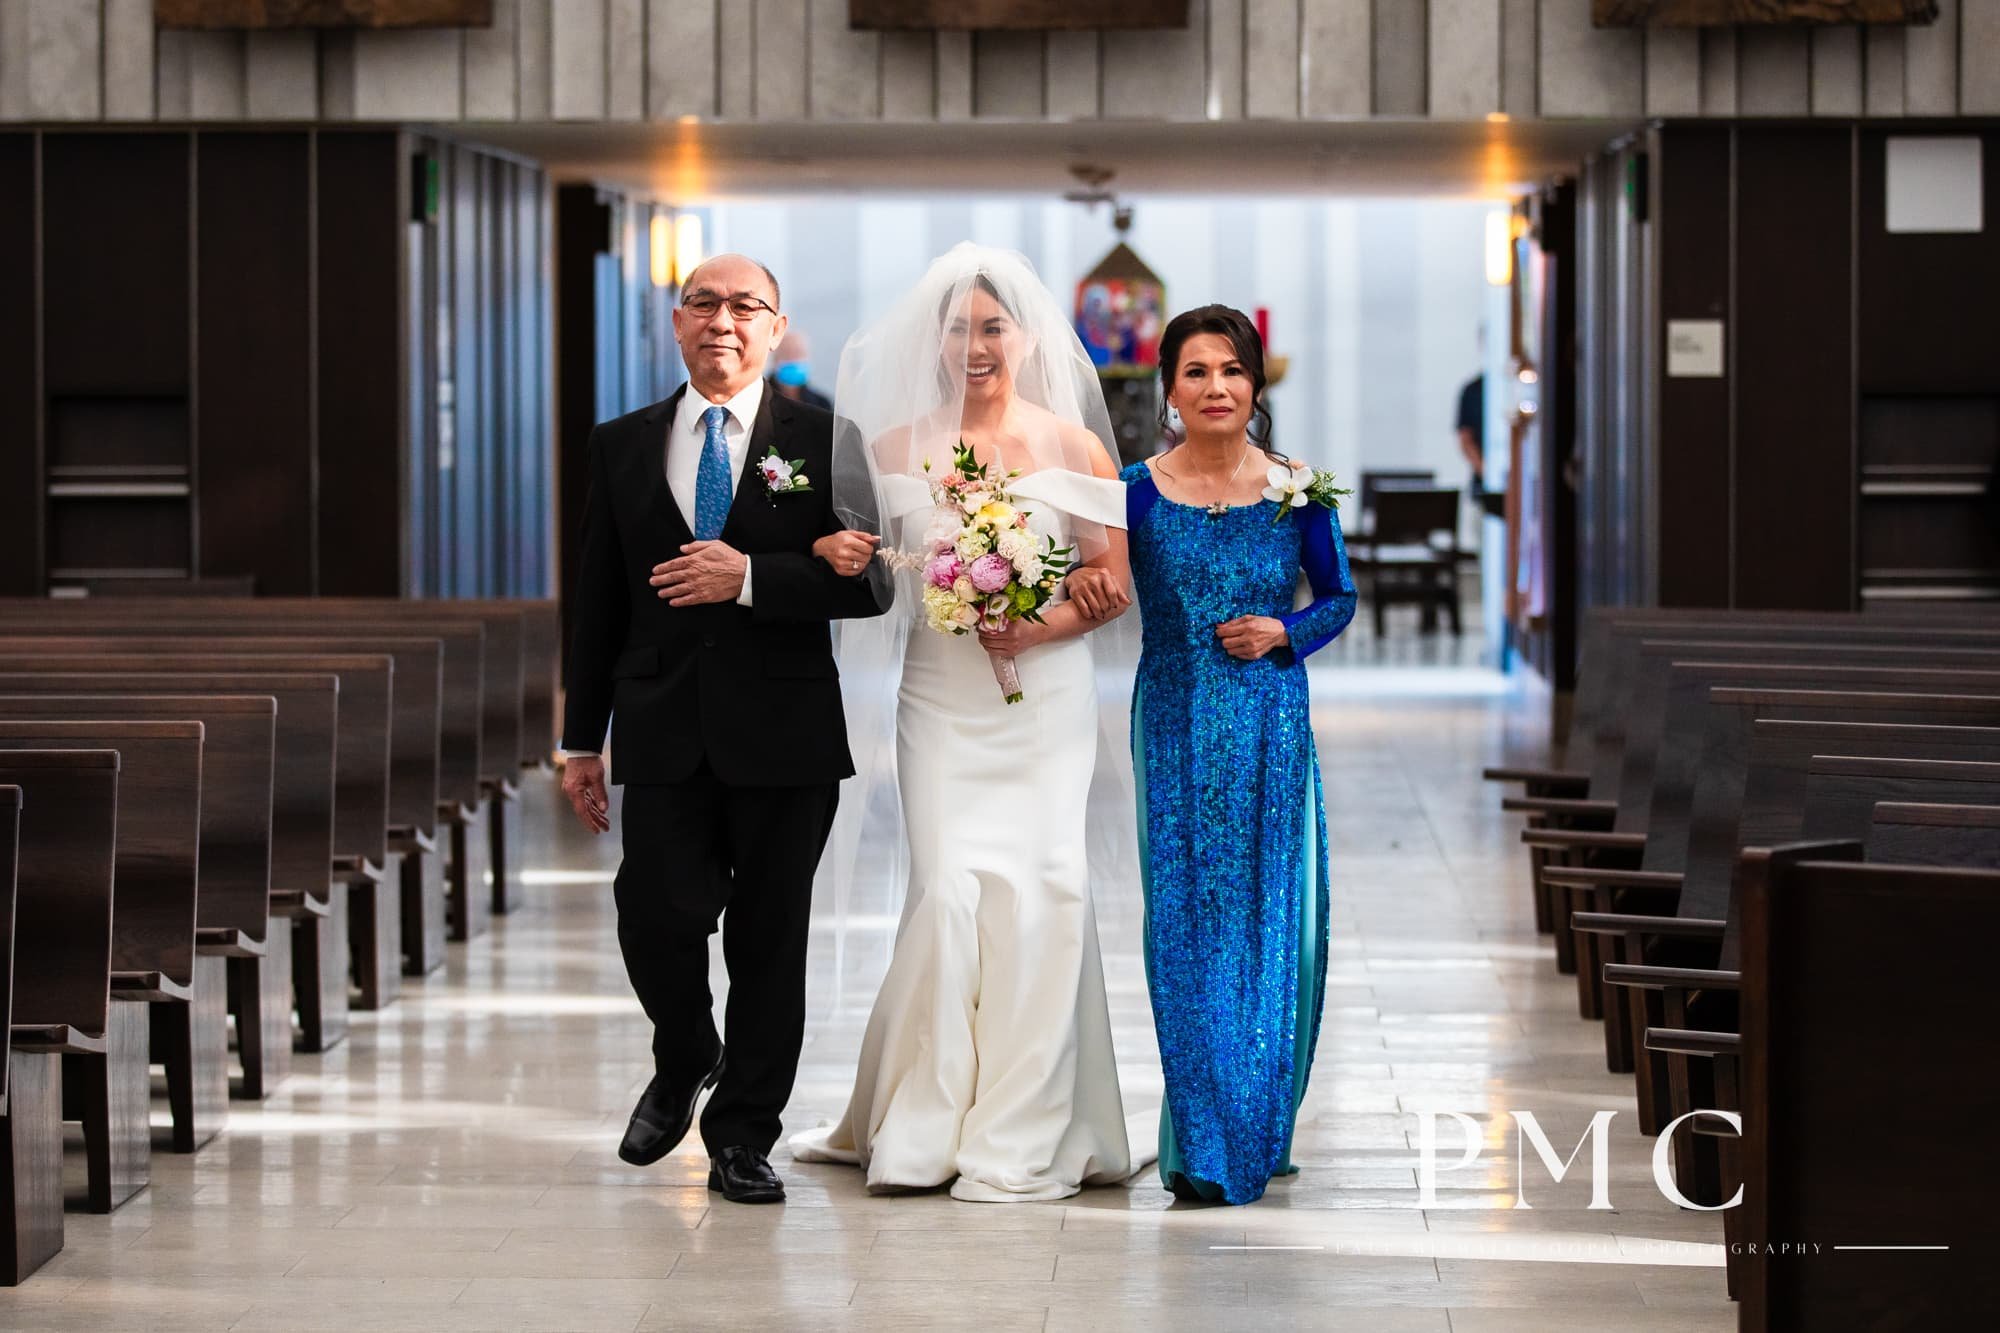 Christ Cathedral and Marriott Irvine Spectrum Wedding - Best Orange County Wedding Photographer-39.jpg